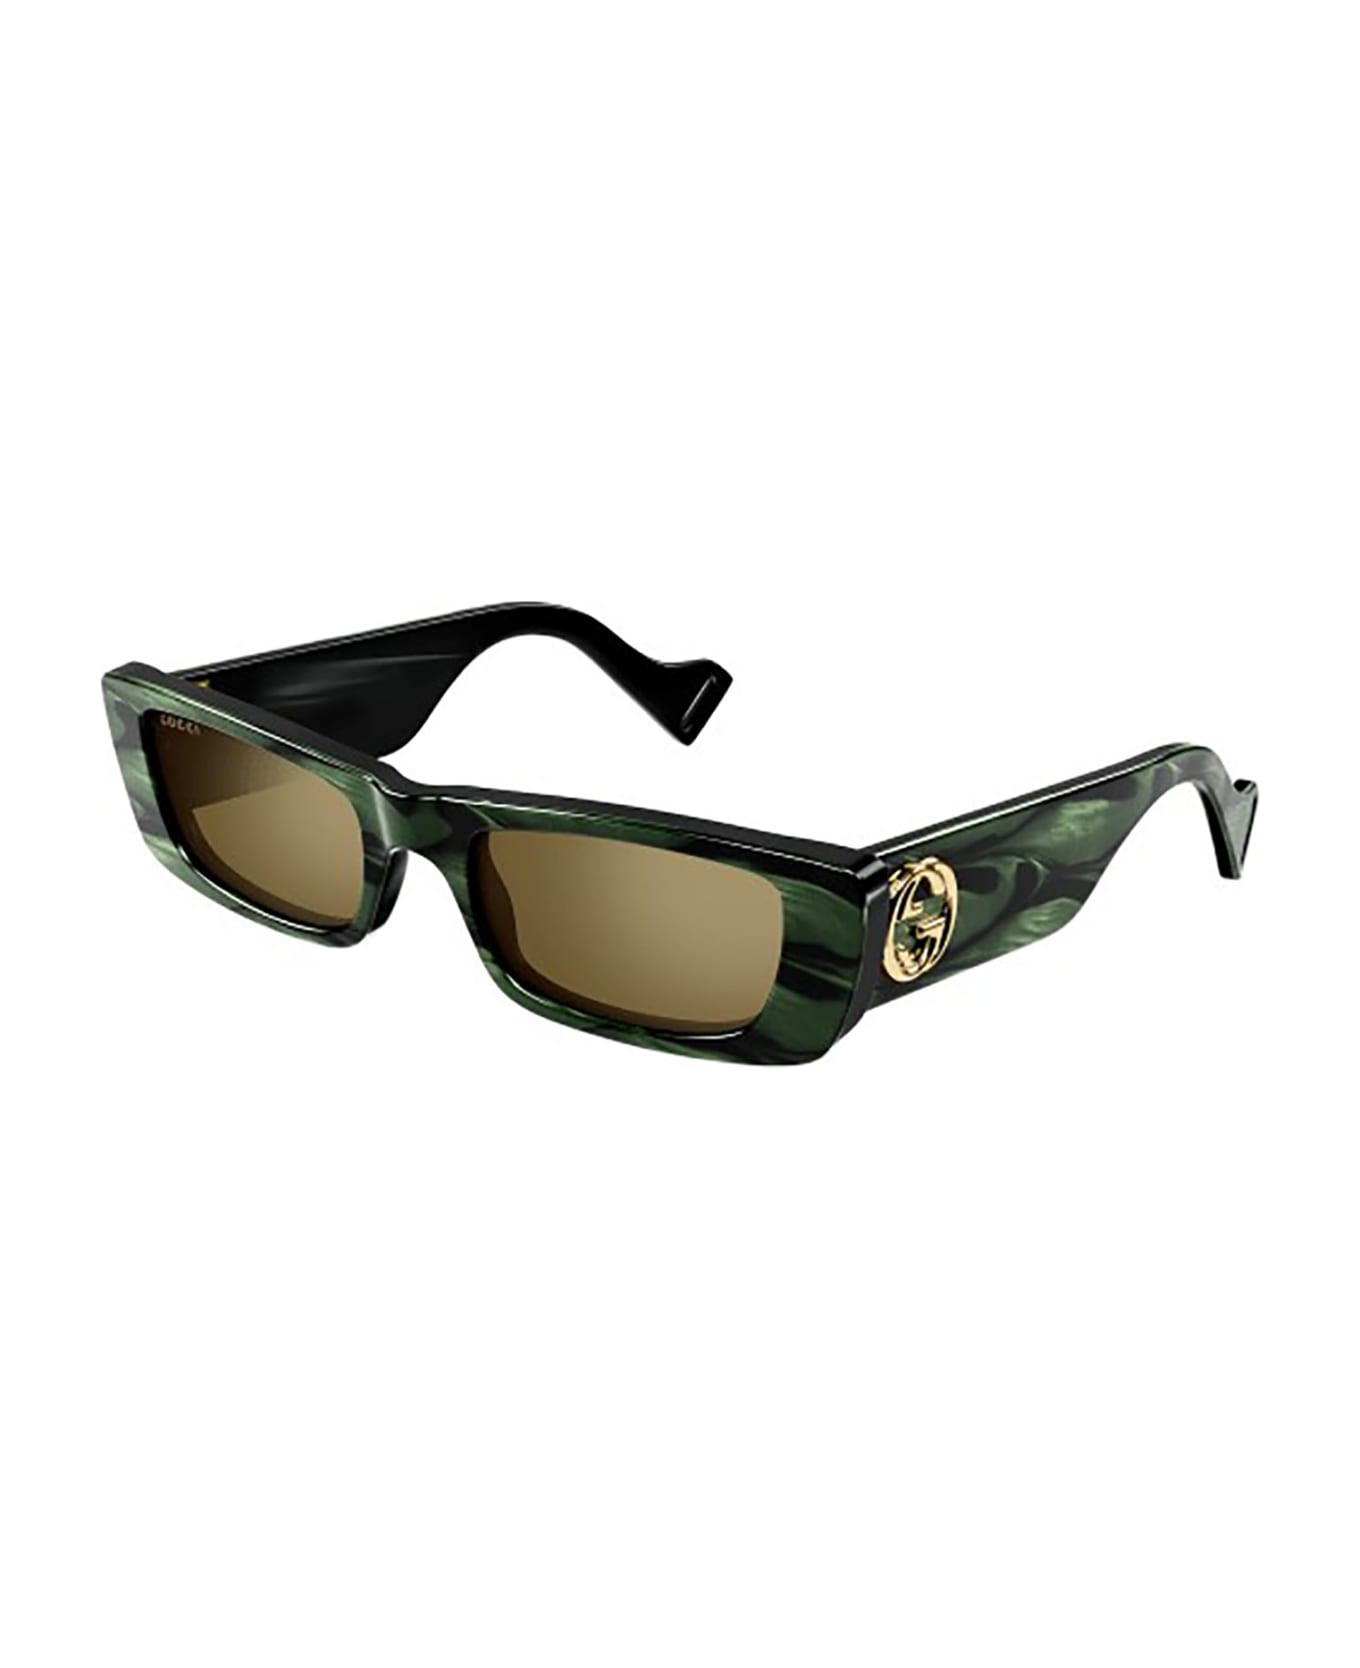 Gucci Eyewear GG0516S Sunglasses - Green Green Bronze サングラス